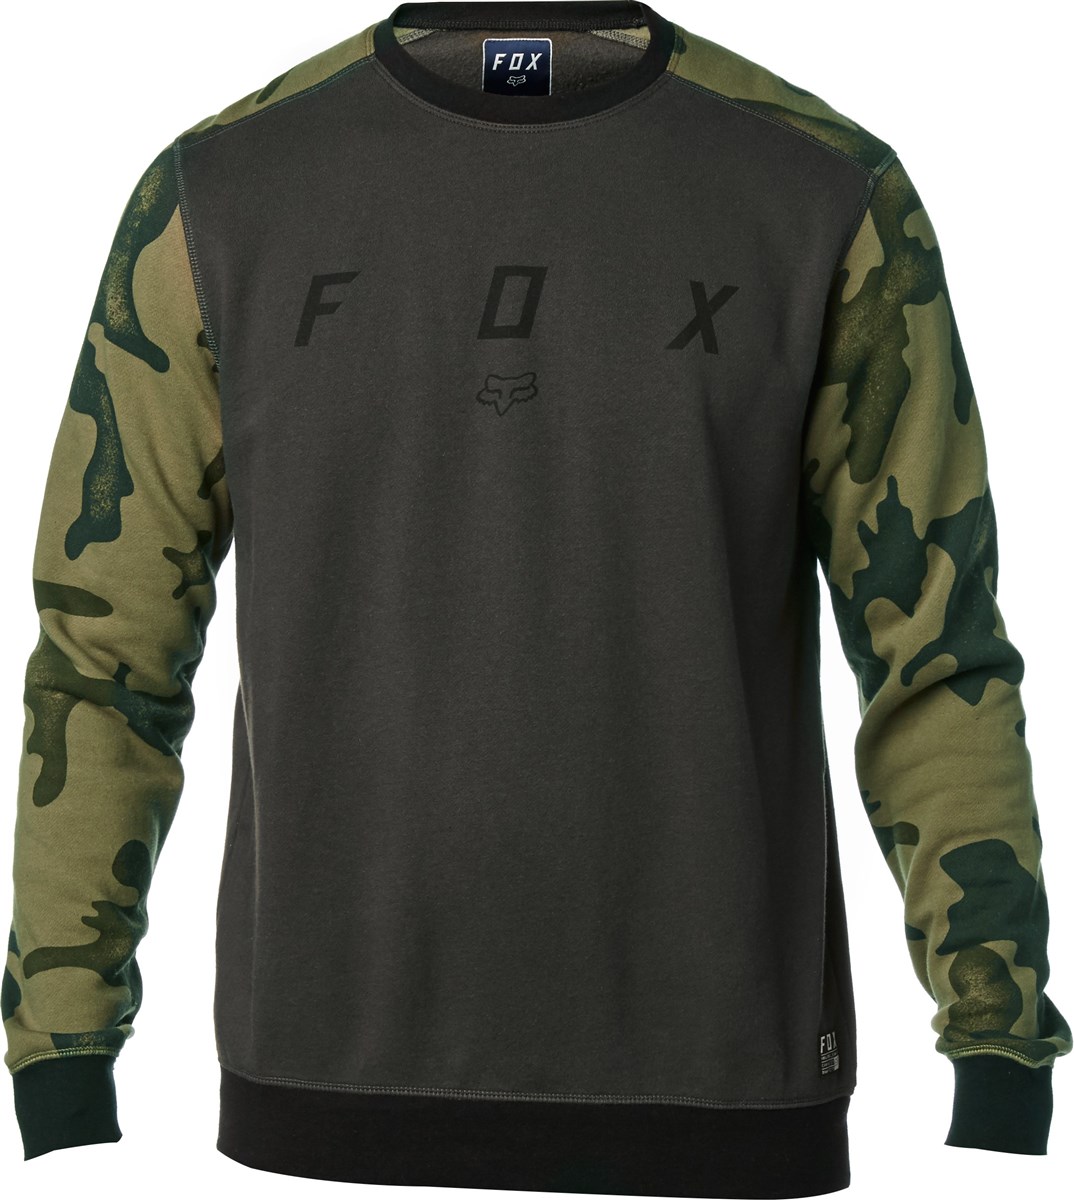 Fox Clothing District Crew Fleece AW17 product image